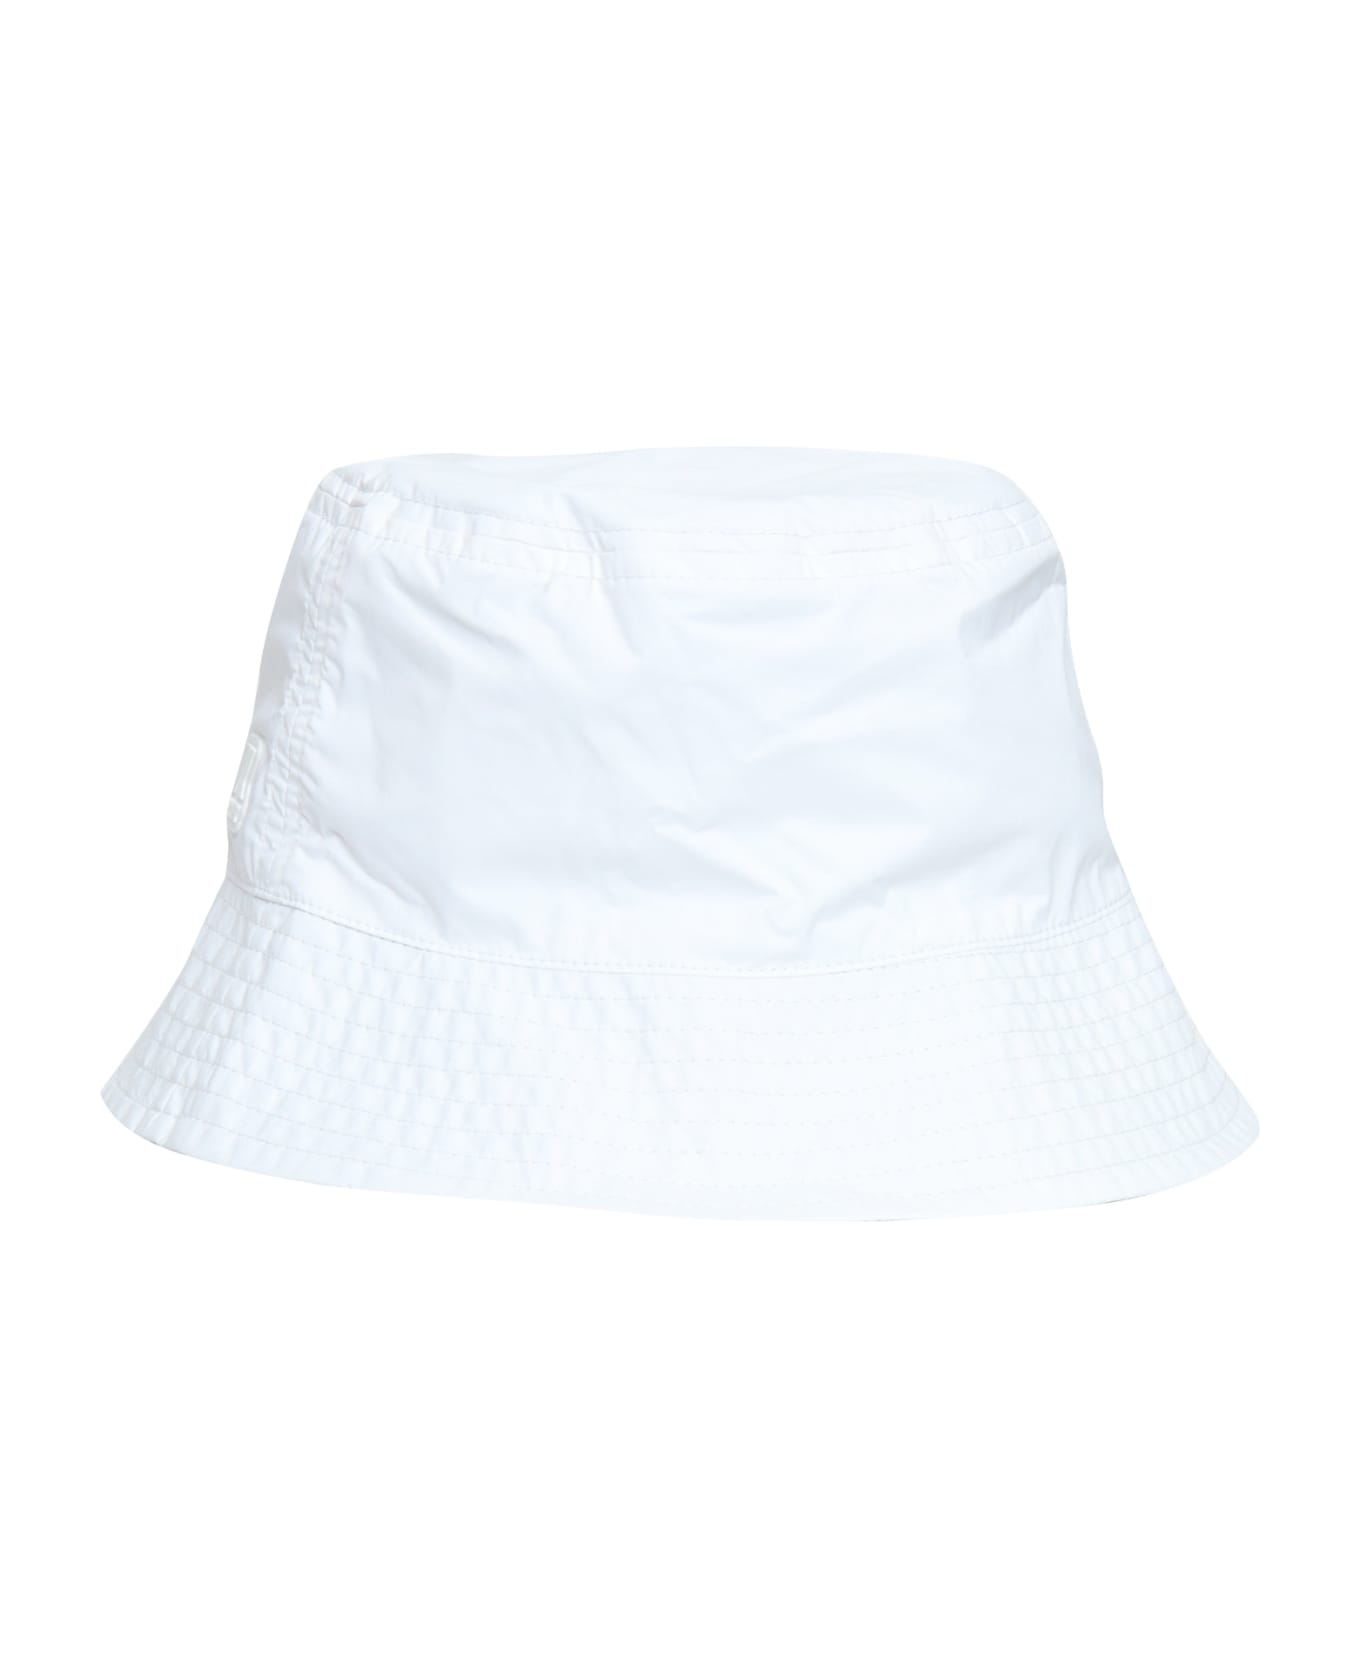 K-Way Pascalle Bucket Hat - WHITE